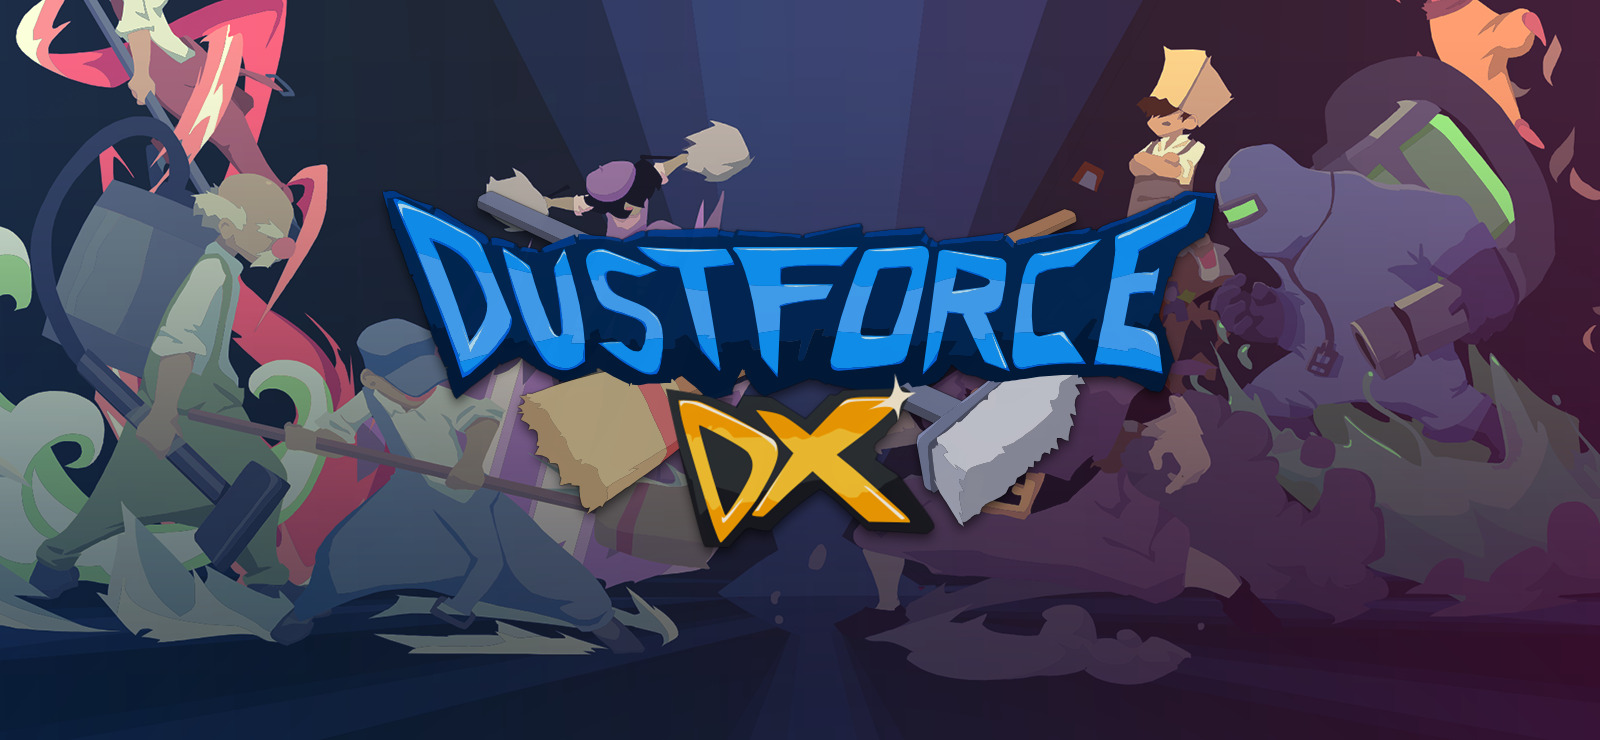 dustforce dx system requirement